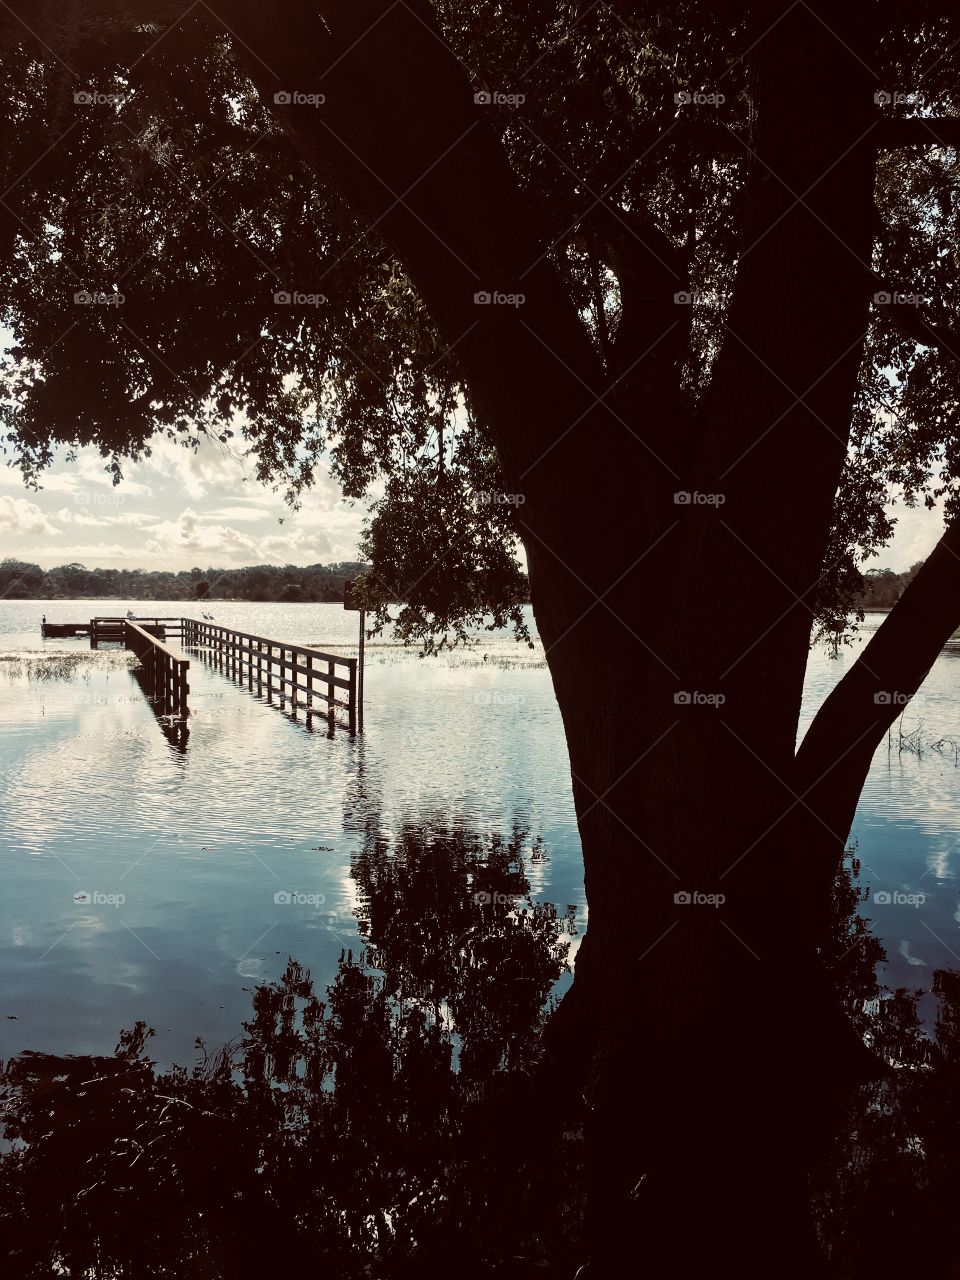 Water walk way - pier under water reflecting a tree silhouette 